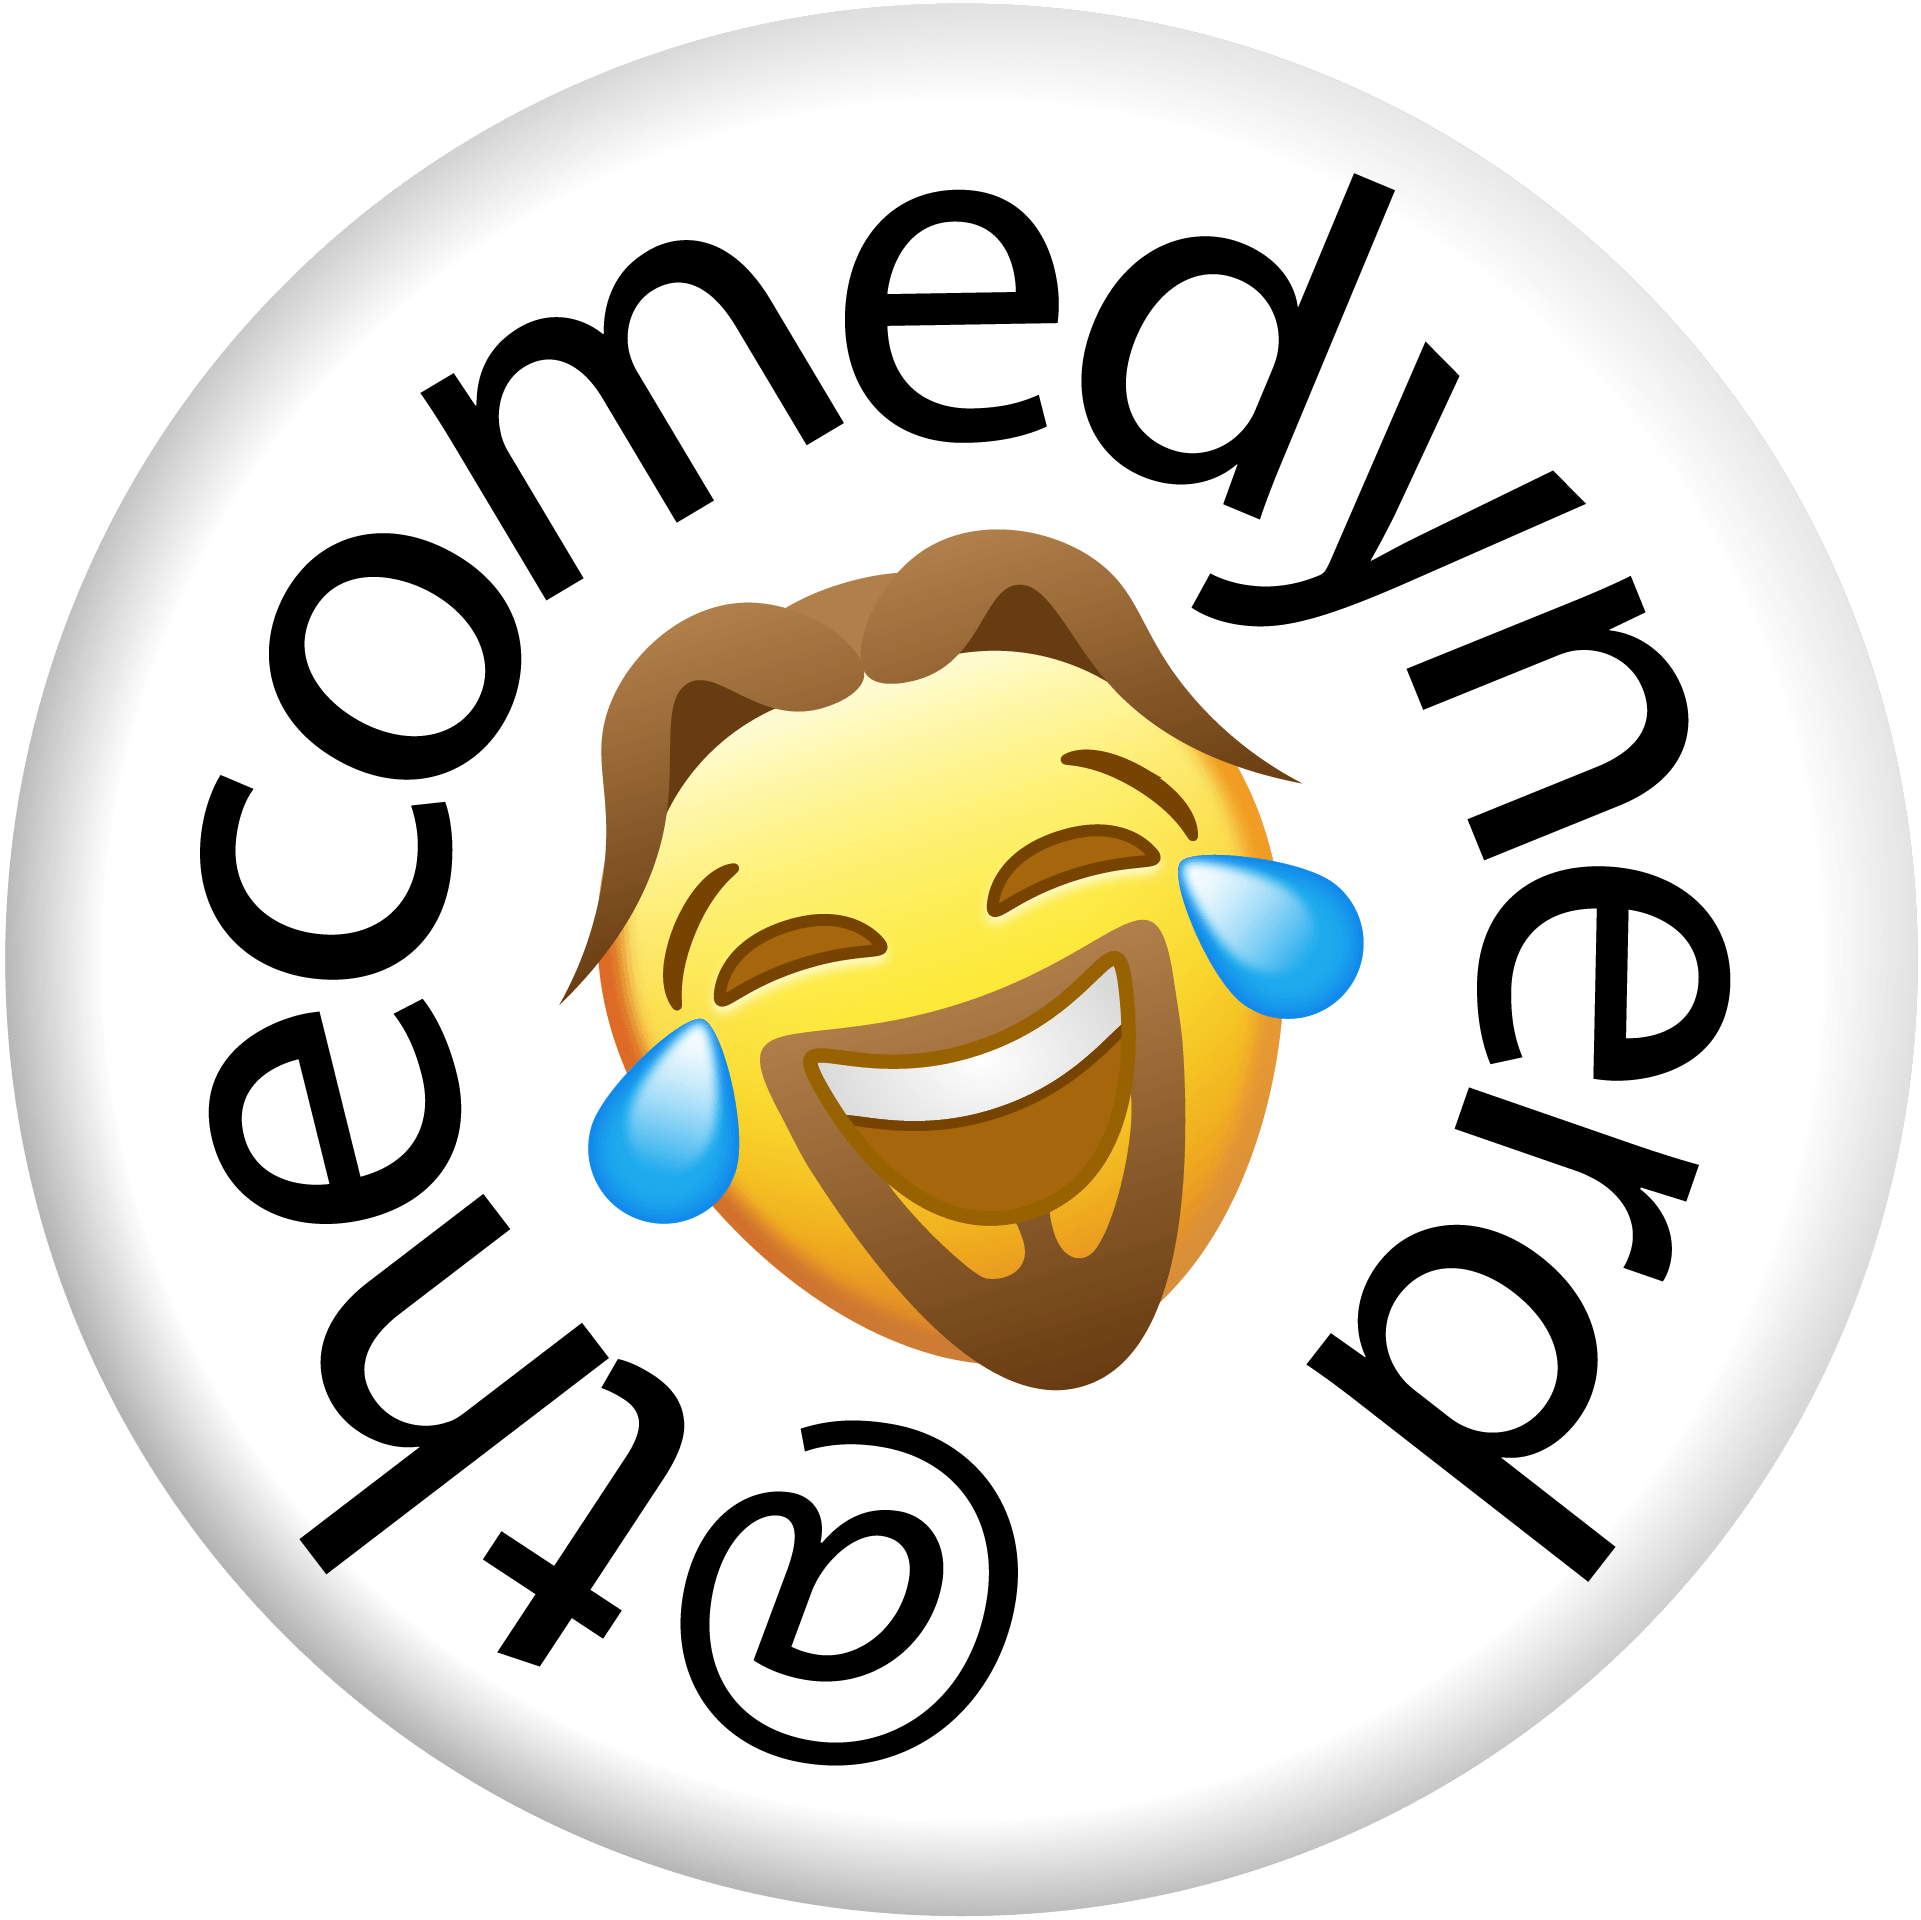 The Comedy Nerd